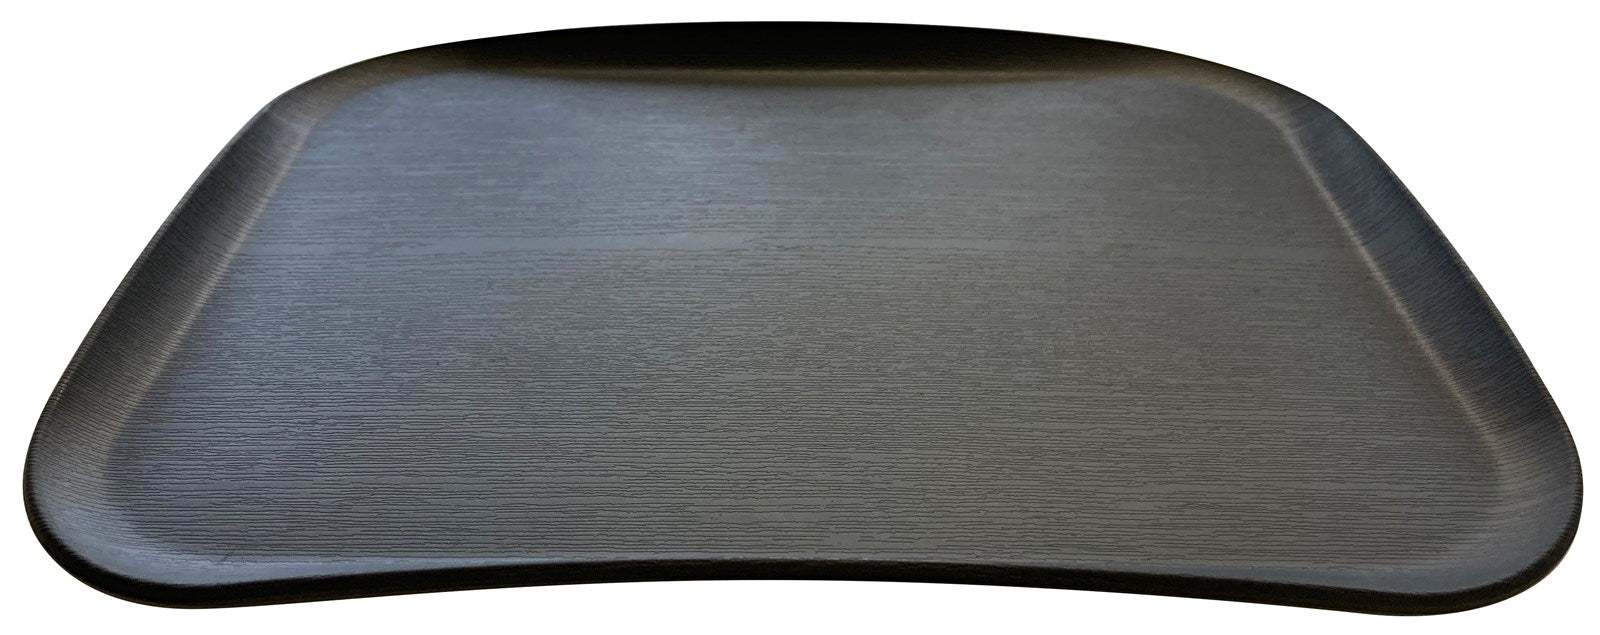 Tablett Rocca GN 1/2 Grain black 32.5x26cm - KAQTU Design